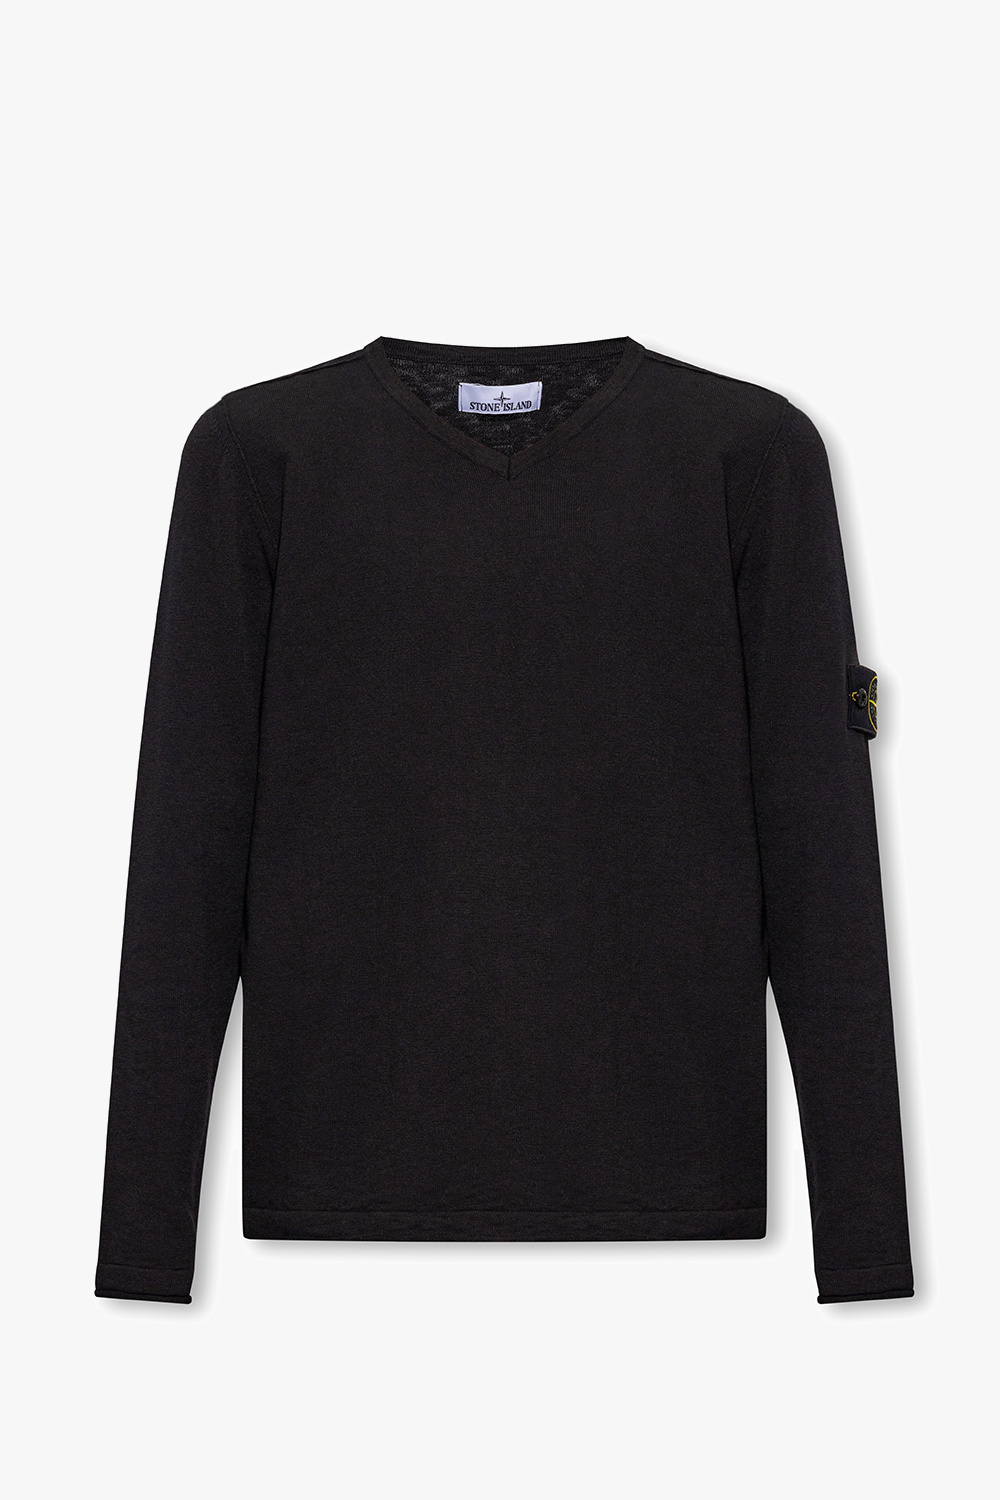 IetpShops Finland - Black Sweater Armani with logo Stone Island